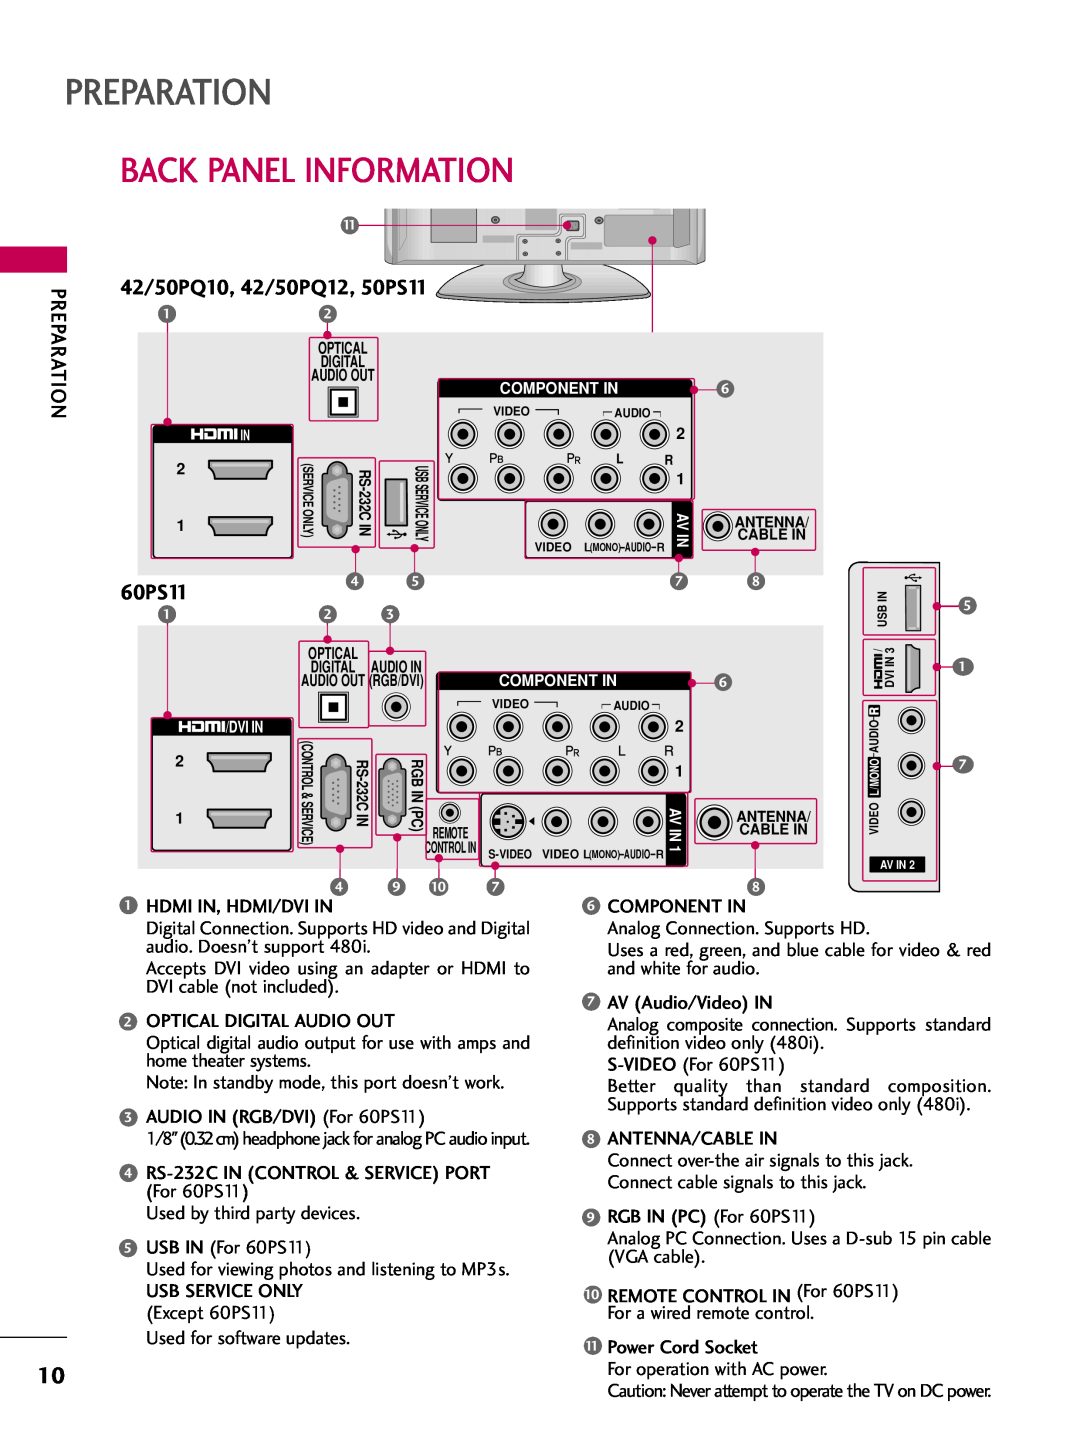 LG Electronics 42PQ12 owner manual Back Panel Information, Preparation, 60PS11, 42/50PQ10, 42/50PQ12, 50PS11 